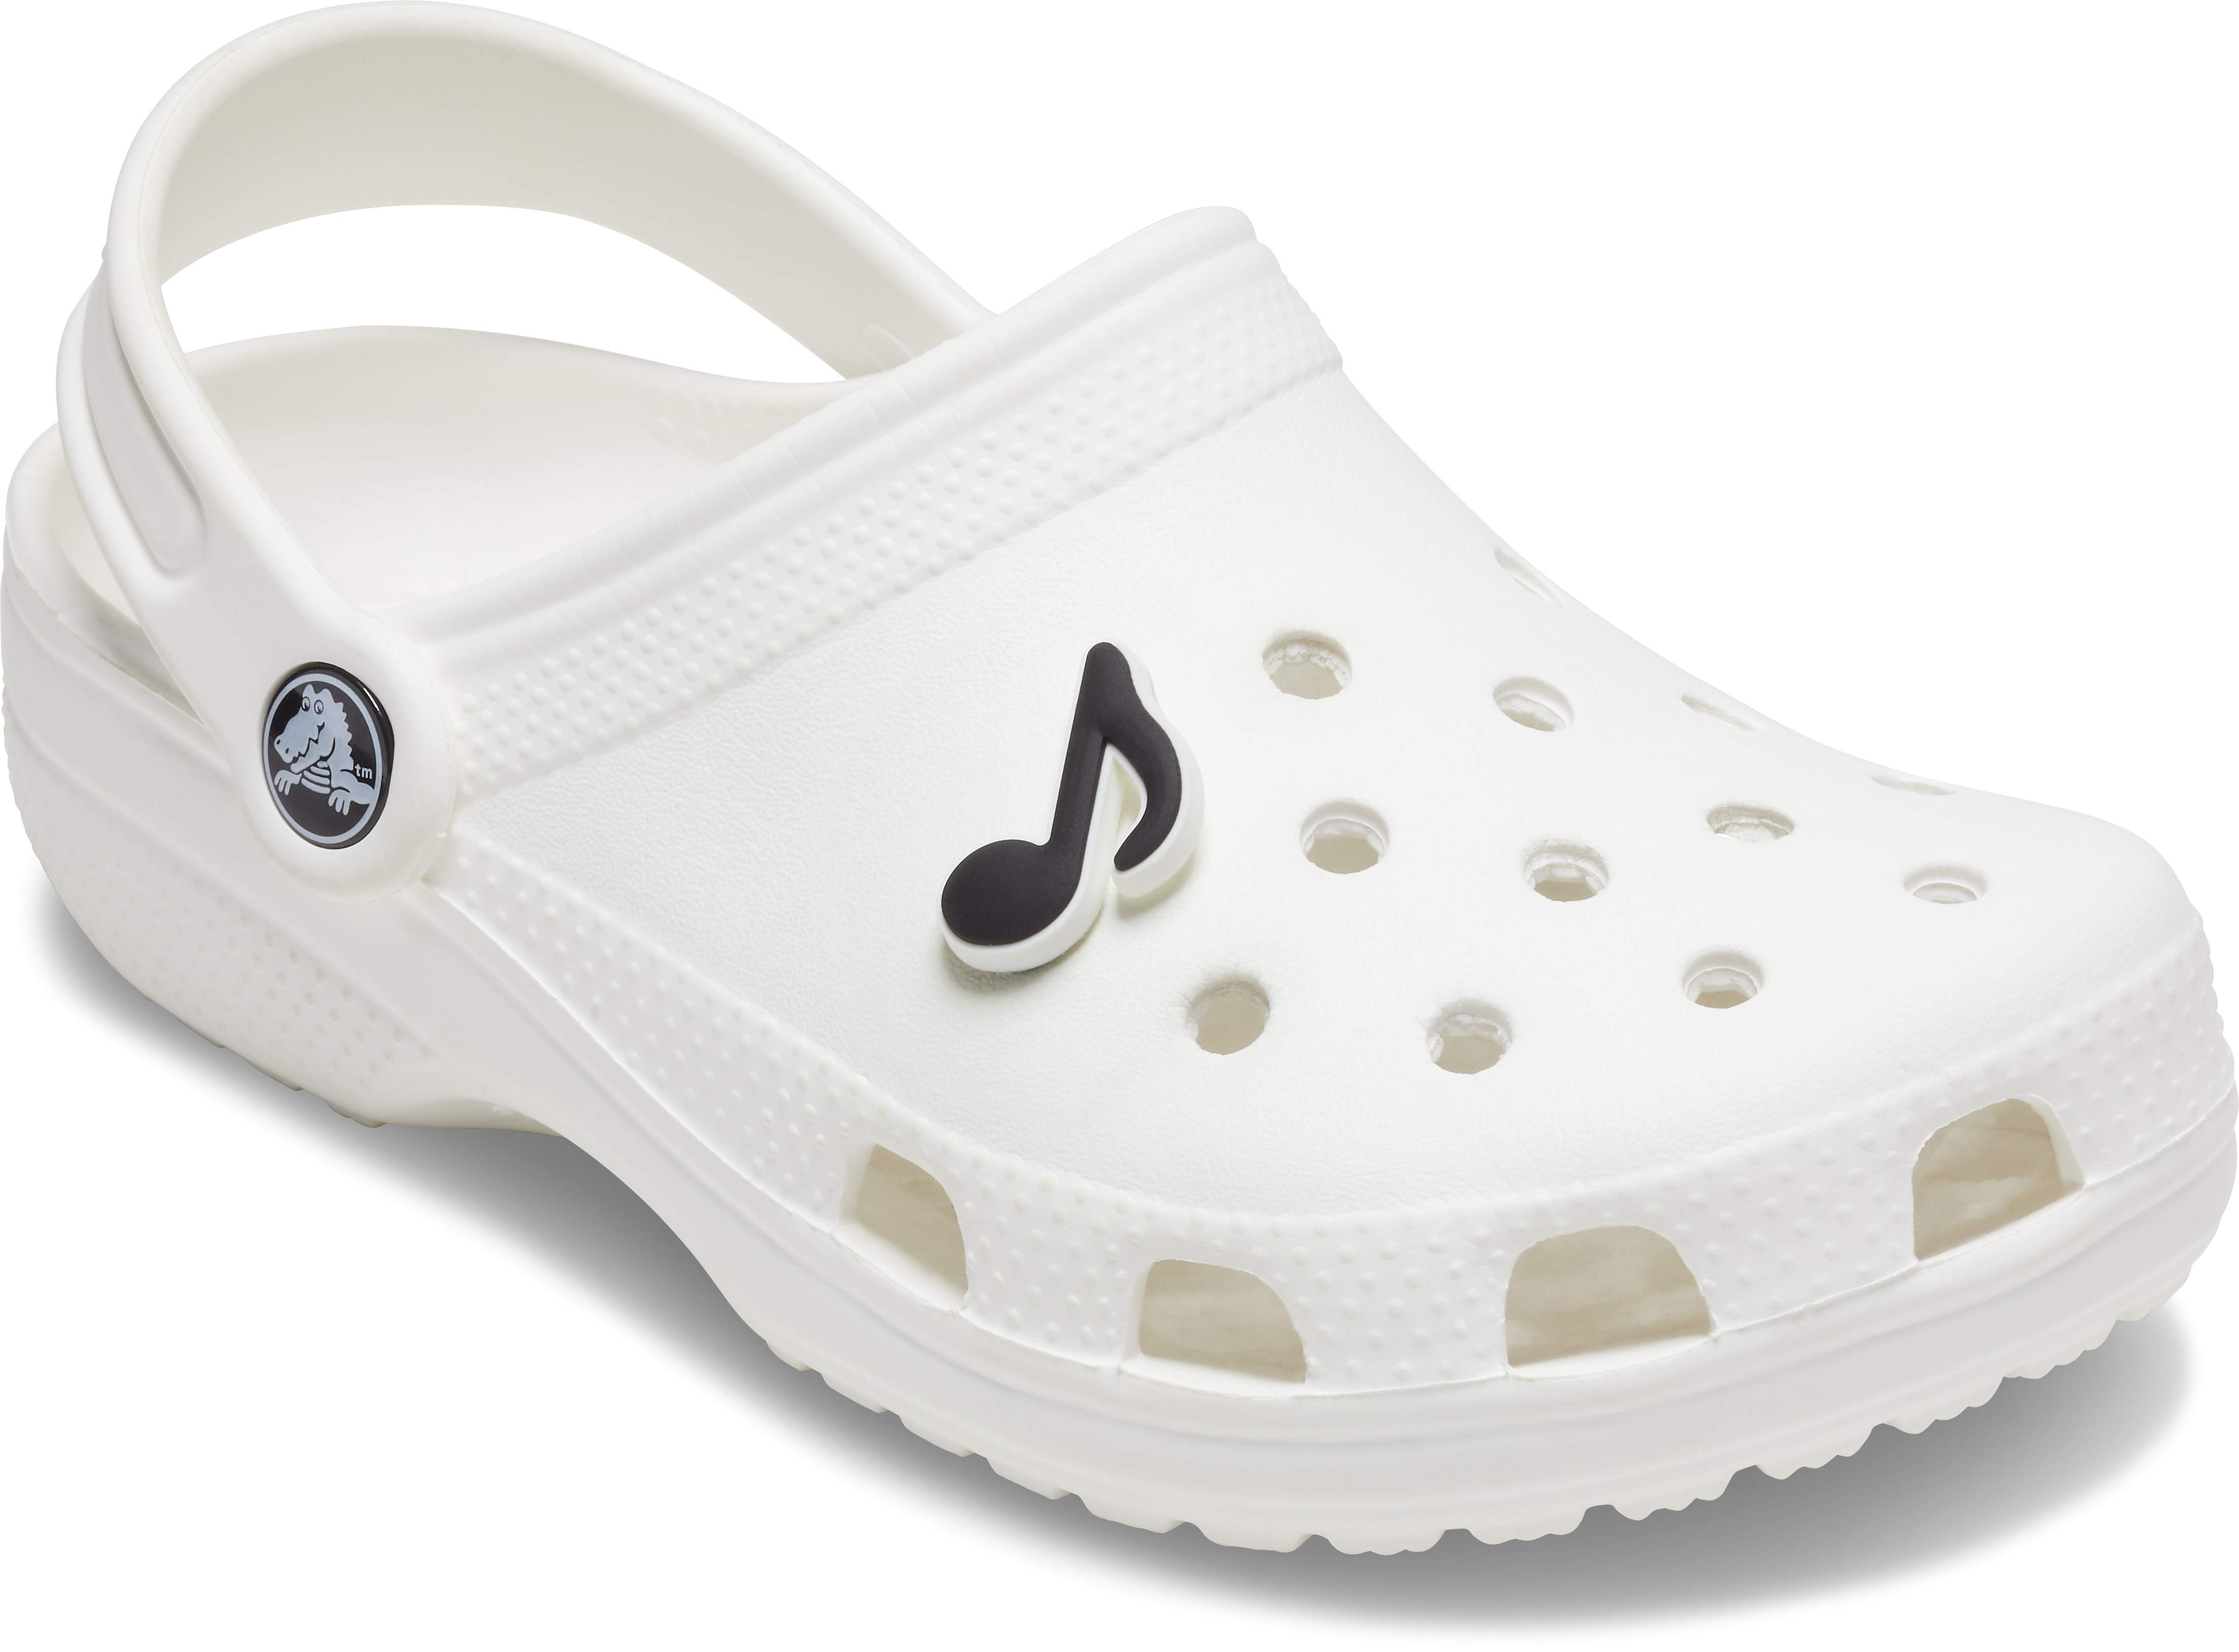 music croc charms